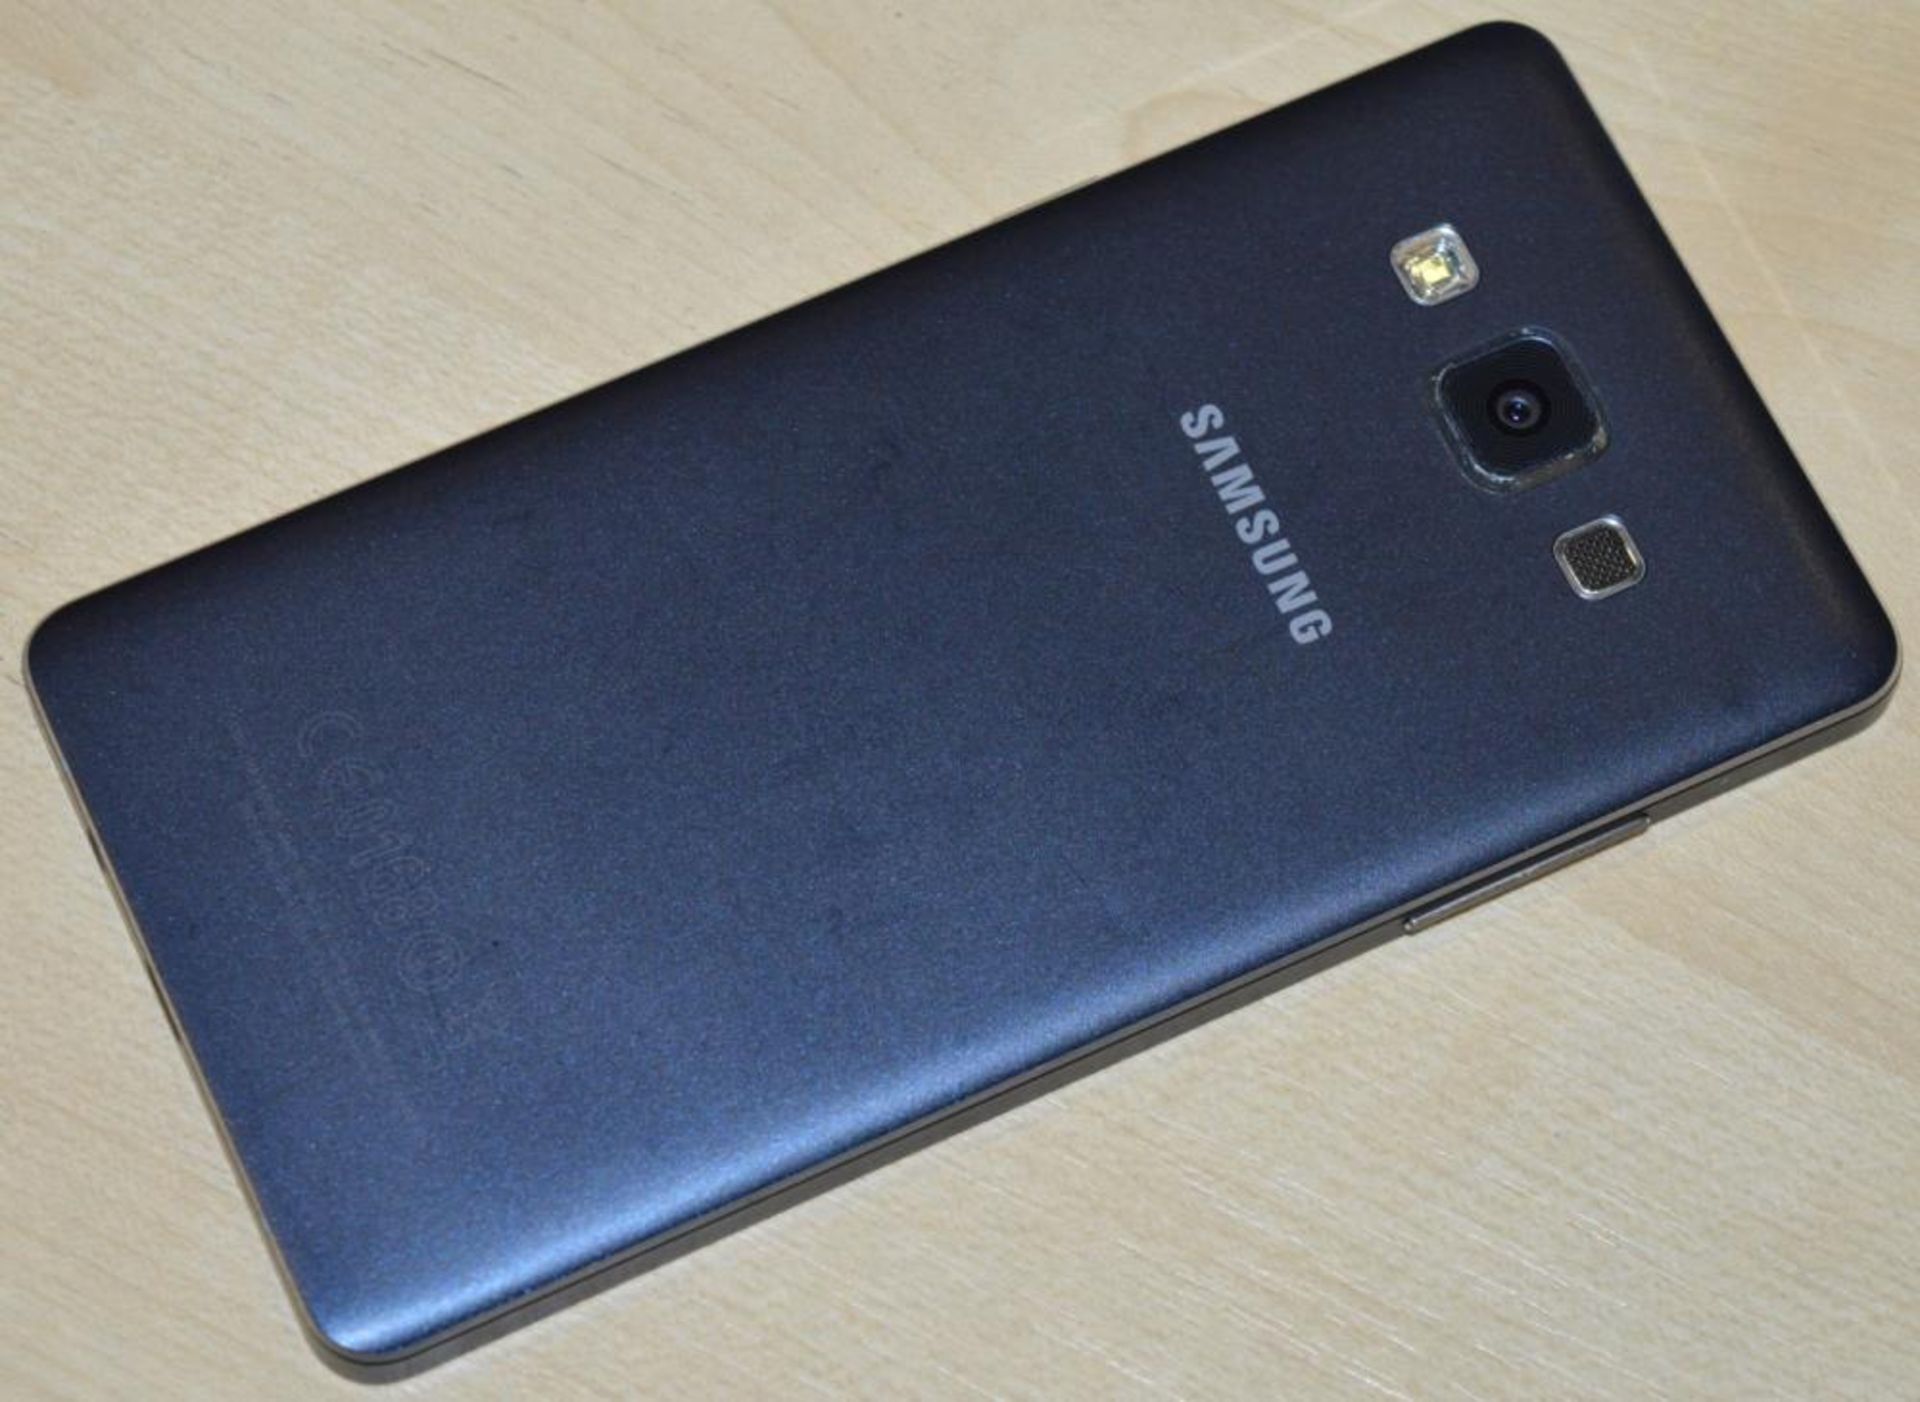 1 x Samsung Galaxy A5 16gb Smart Phone - Model SM-A500FU - Midnight Black - CL285 - Ref J0000 - - Image 3 of 3